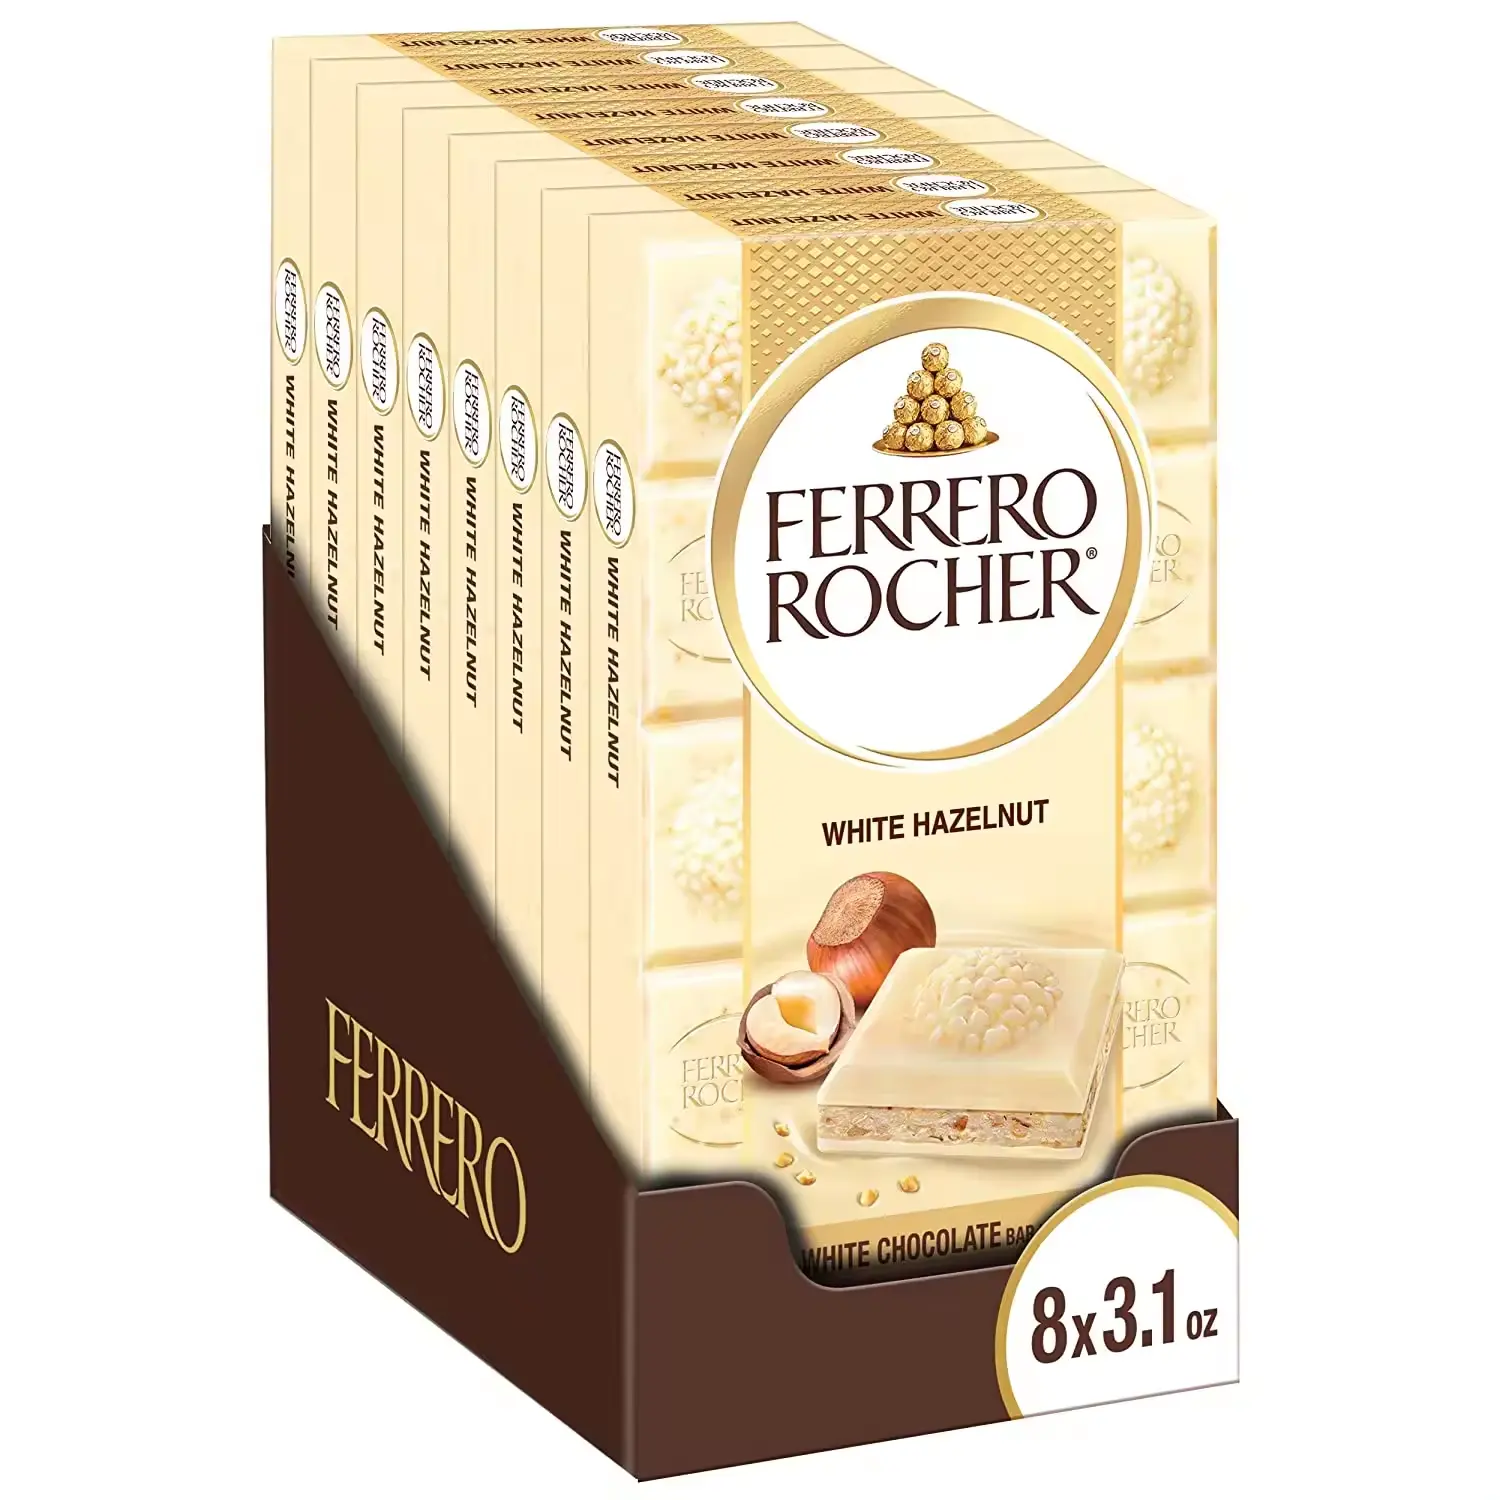 FERRERO ROCHER CHOCOLATE COLLECTION